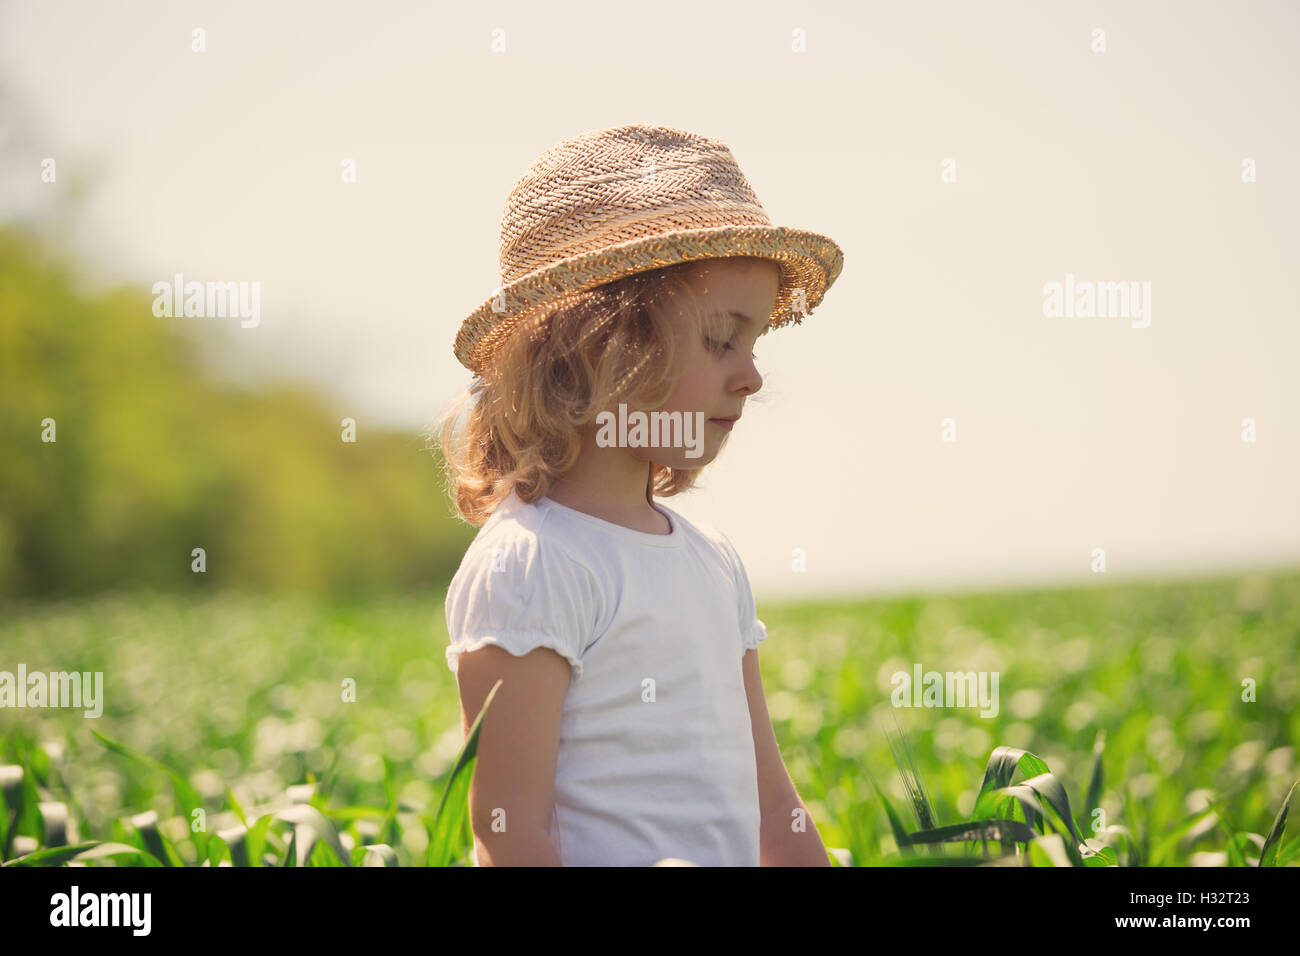 Little girl in straw hat walking through field, summer outdoor Stock Photo